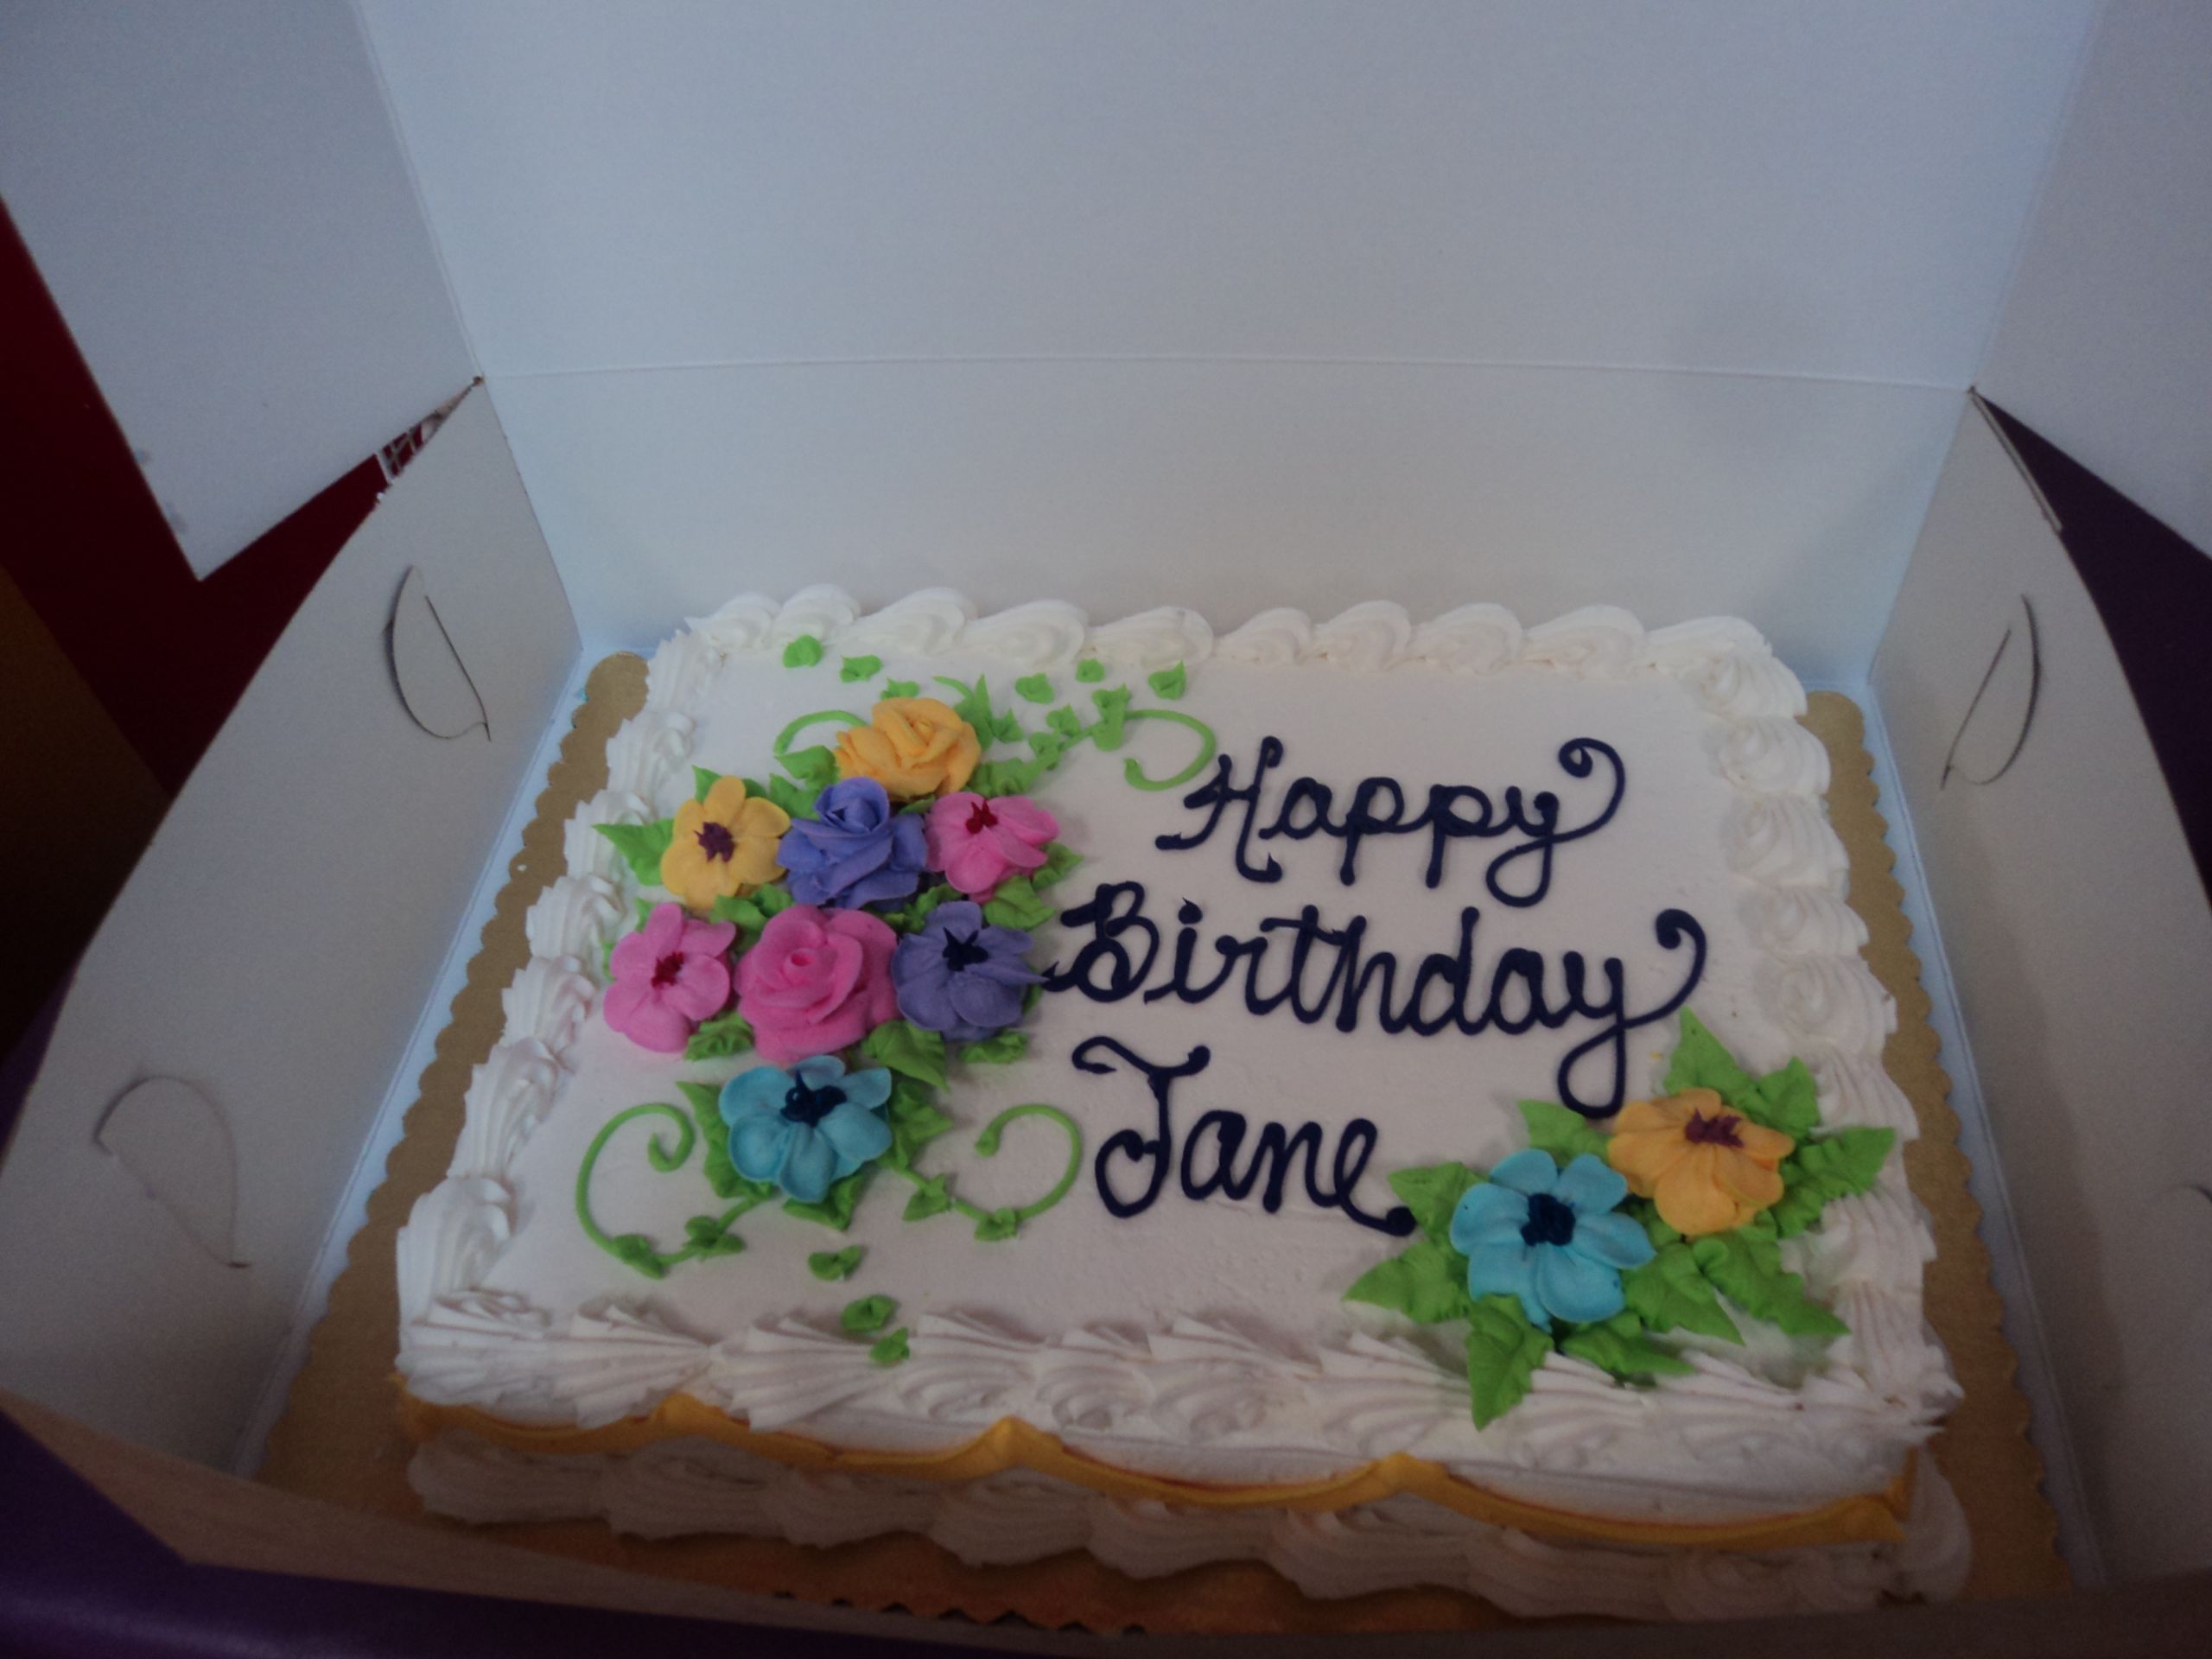 Albertsons Birthday Cake Designs
 Frozen Cakes At Safeway